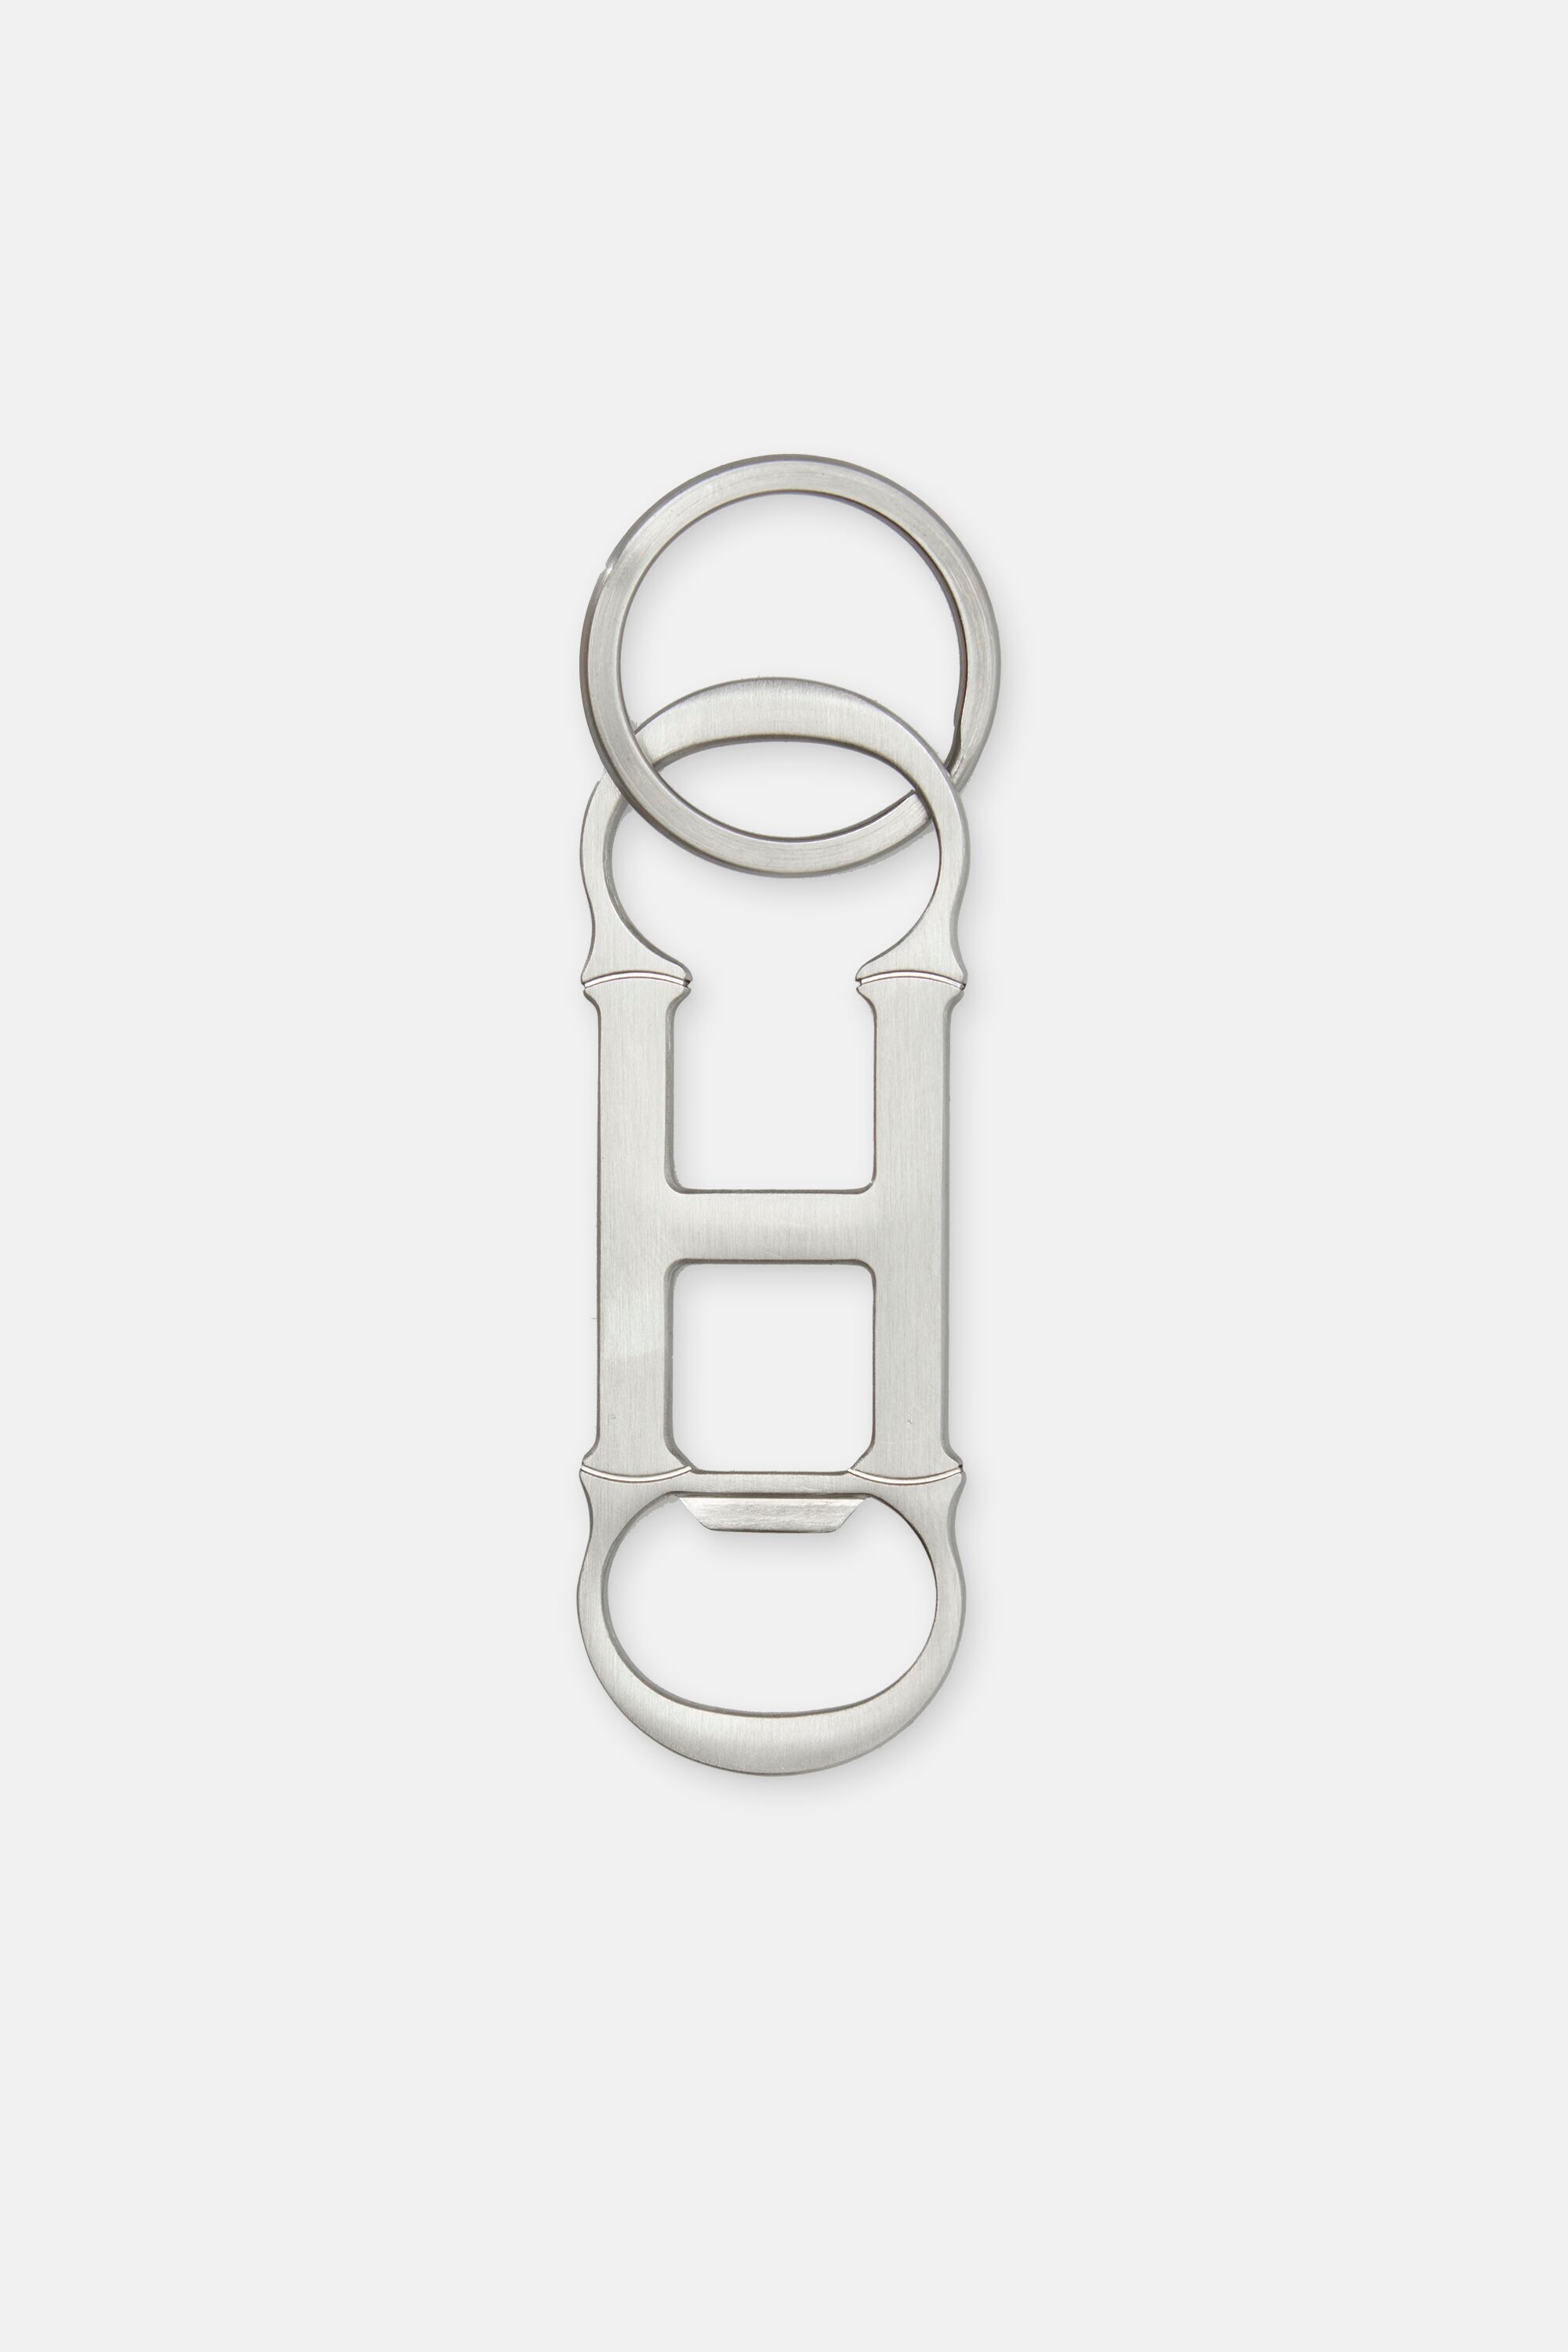 Initials Insignia | Bottle opener keychain